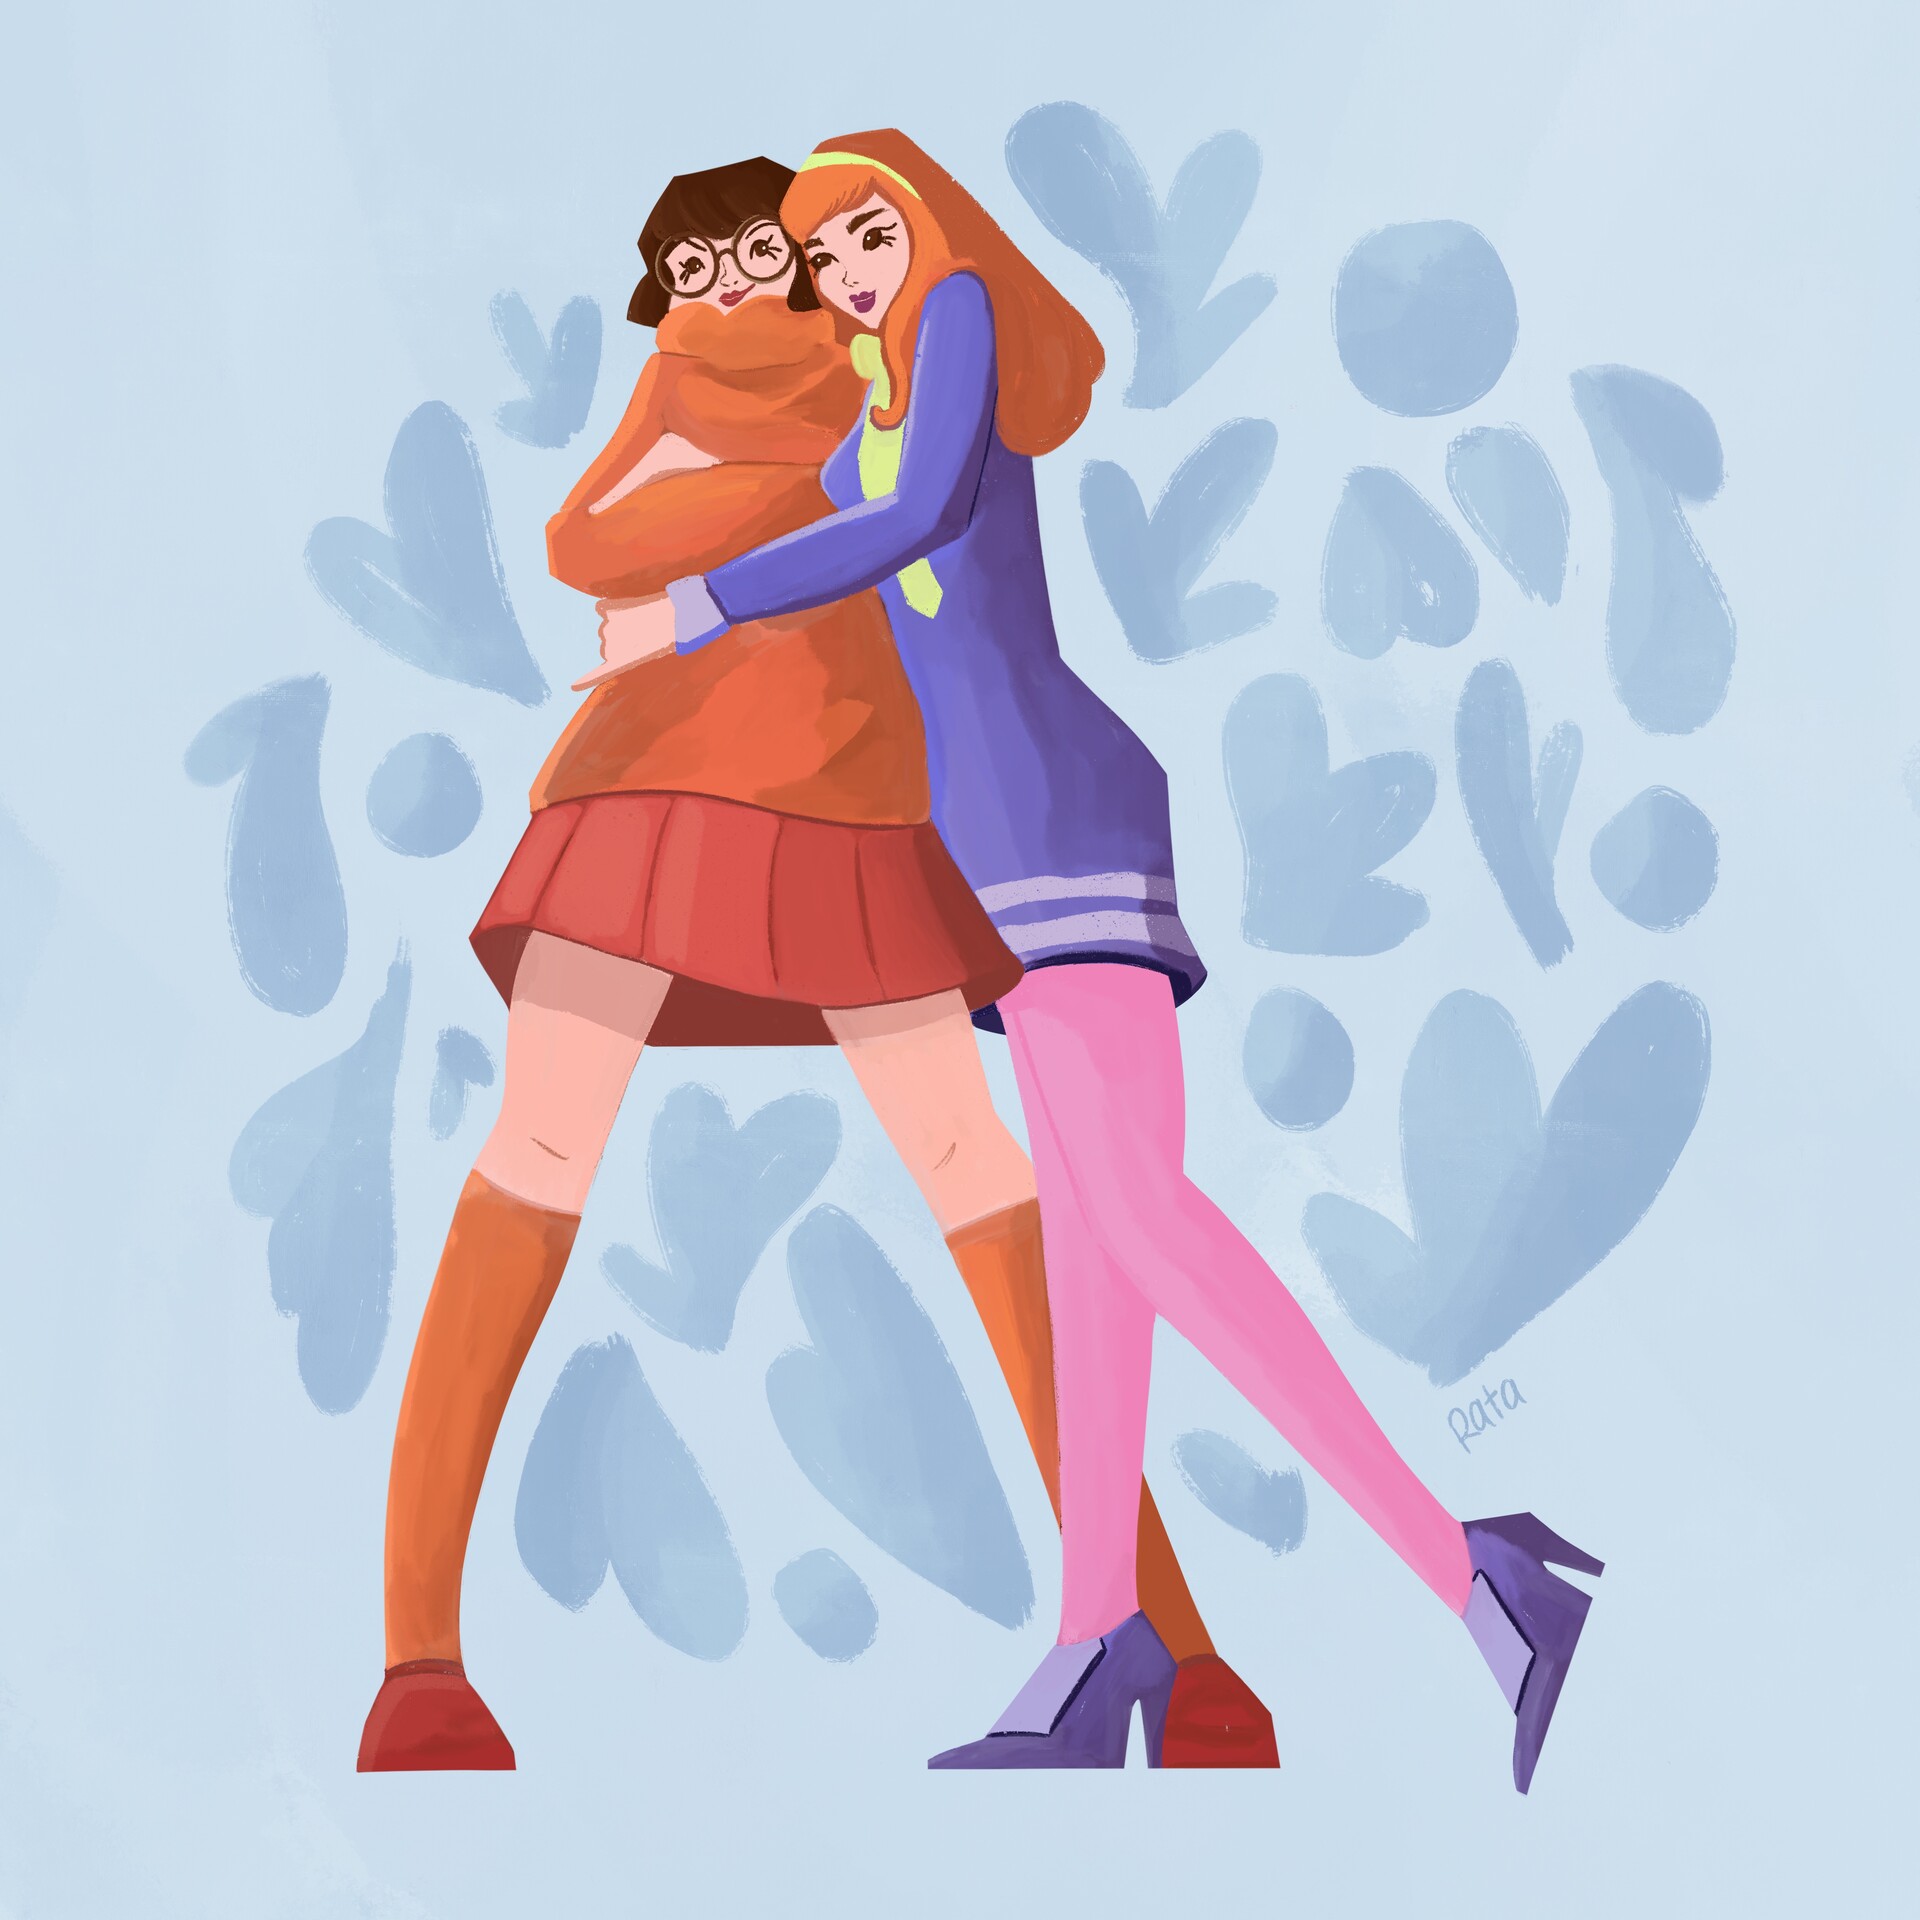 ArtStation - Daphne and Velma